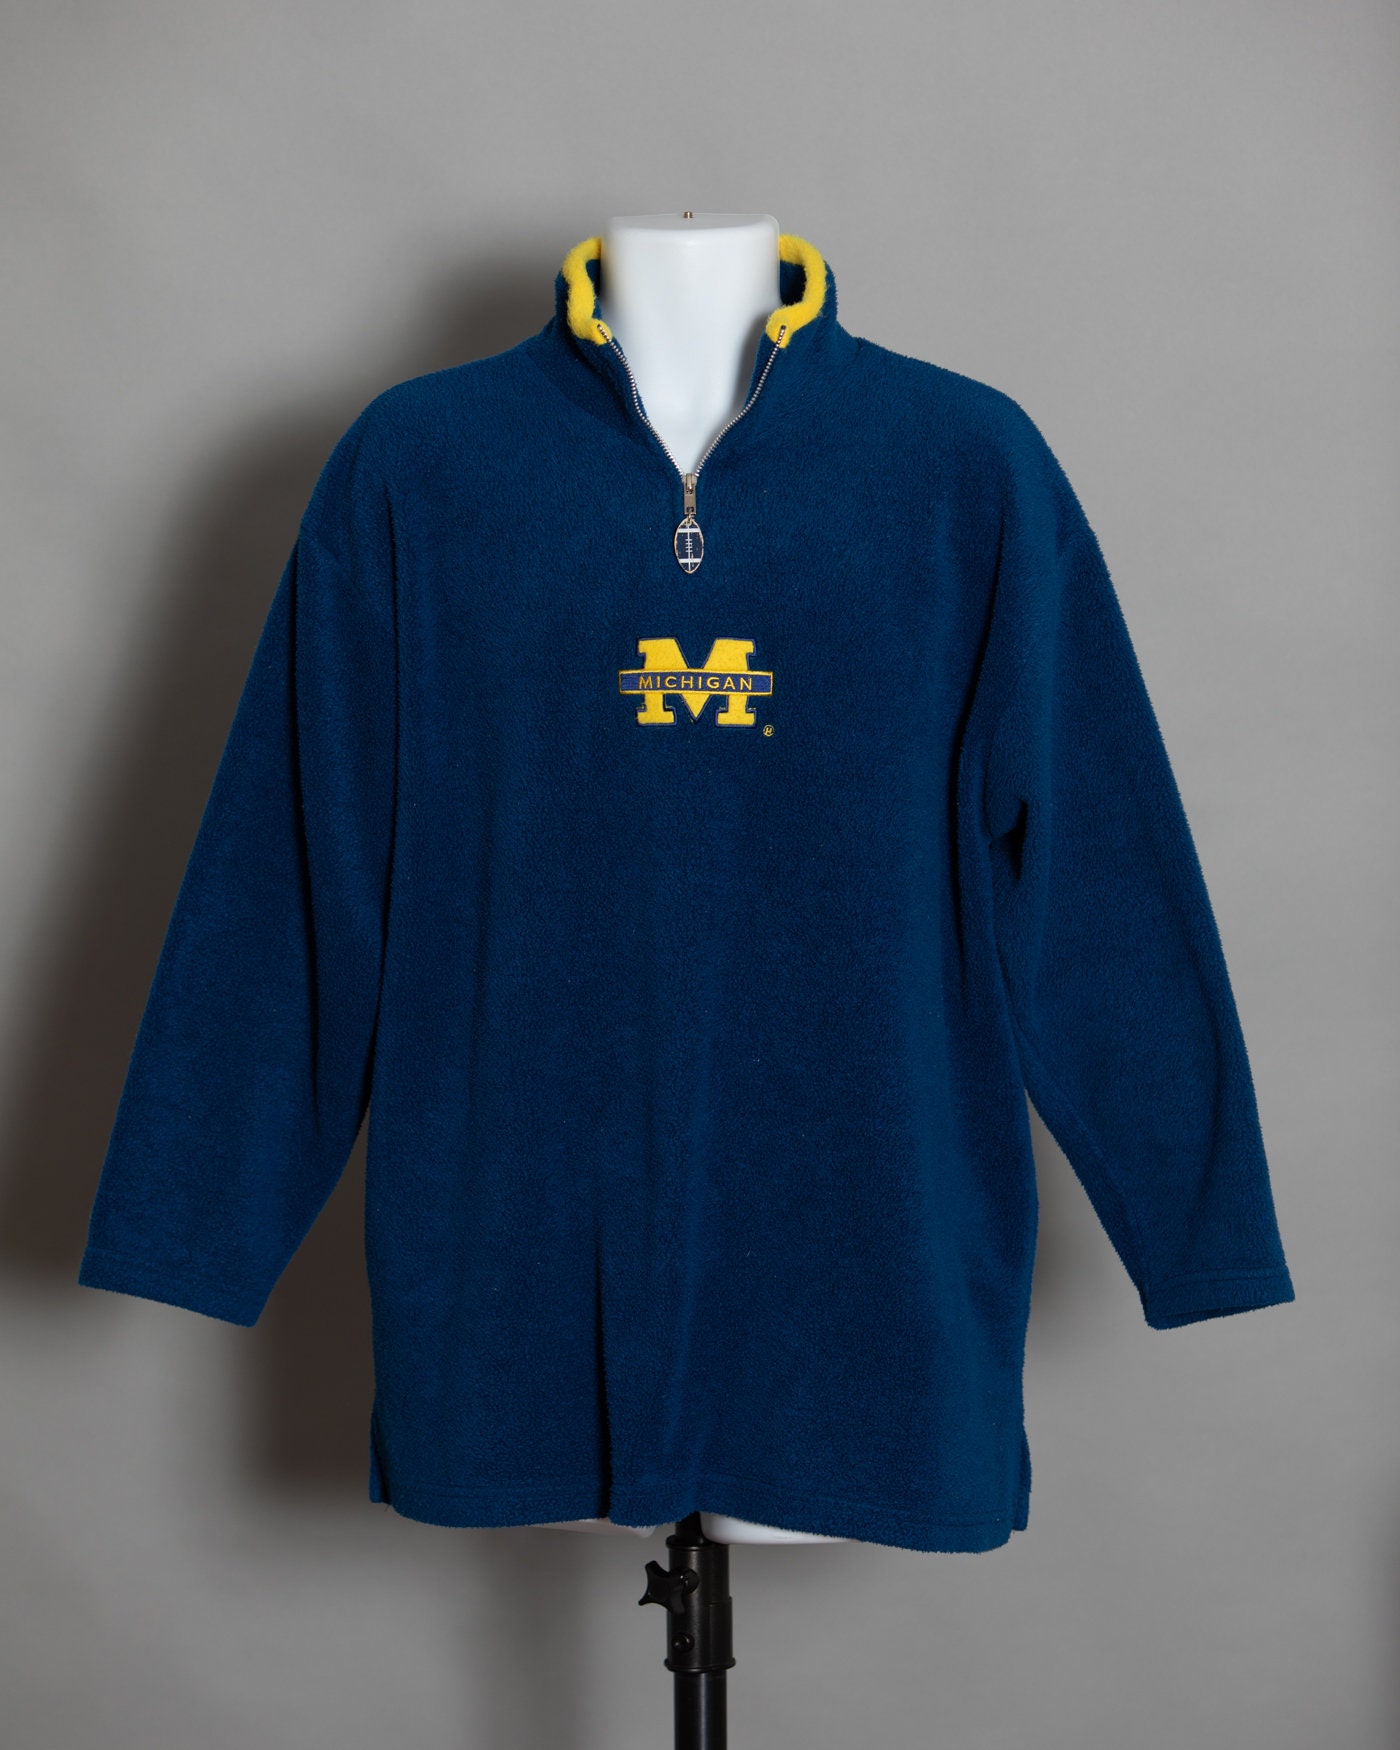 Fleece University of Michigan Wolverines U of M Holiday Christmas  Sweater-Look College Fleece Fabric Print